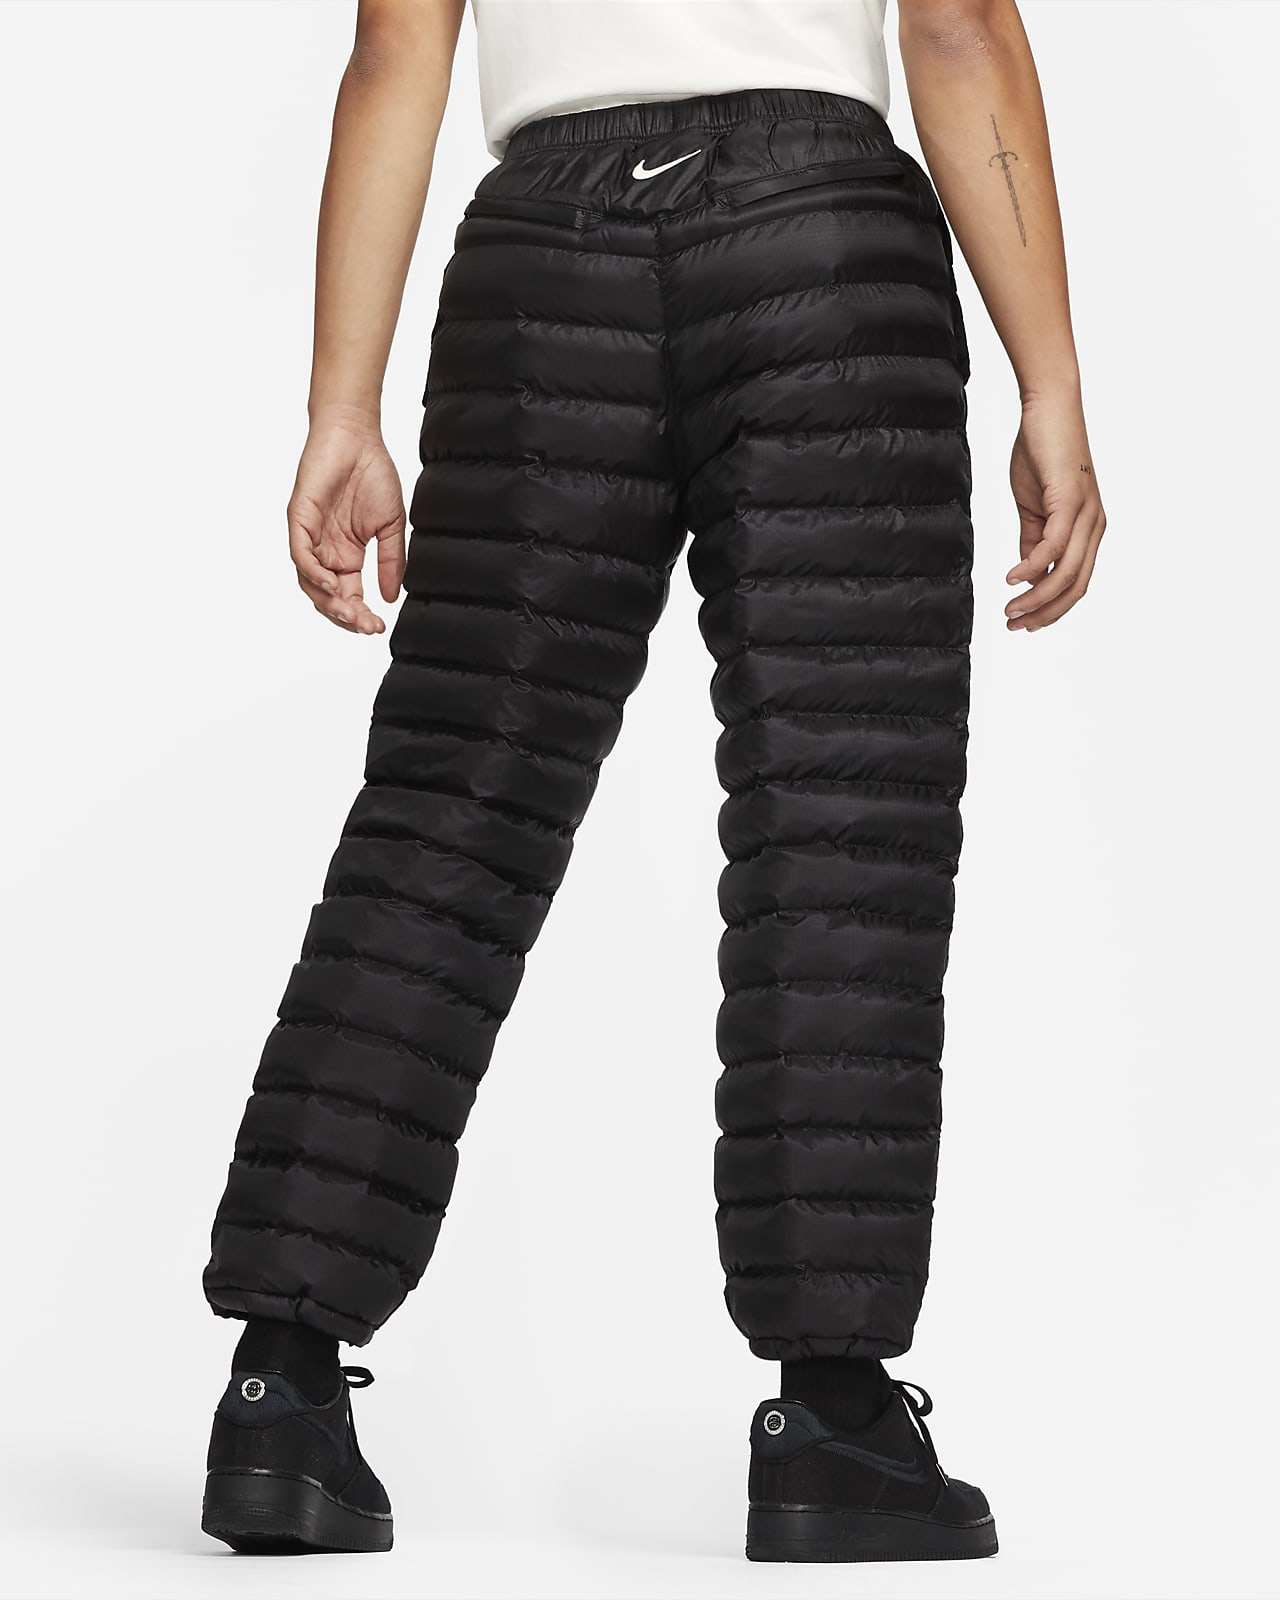 Nike x Stüssy Insulated Pants